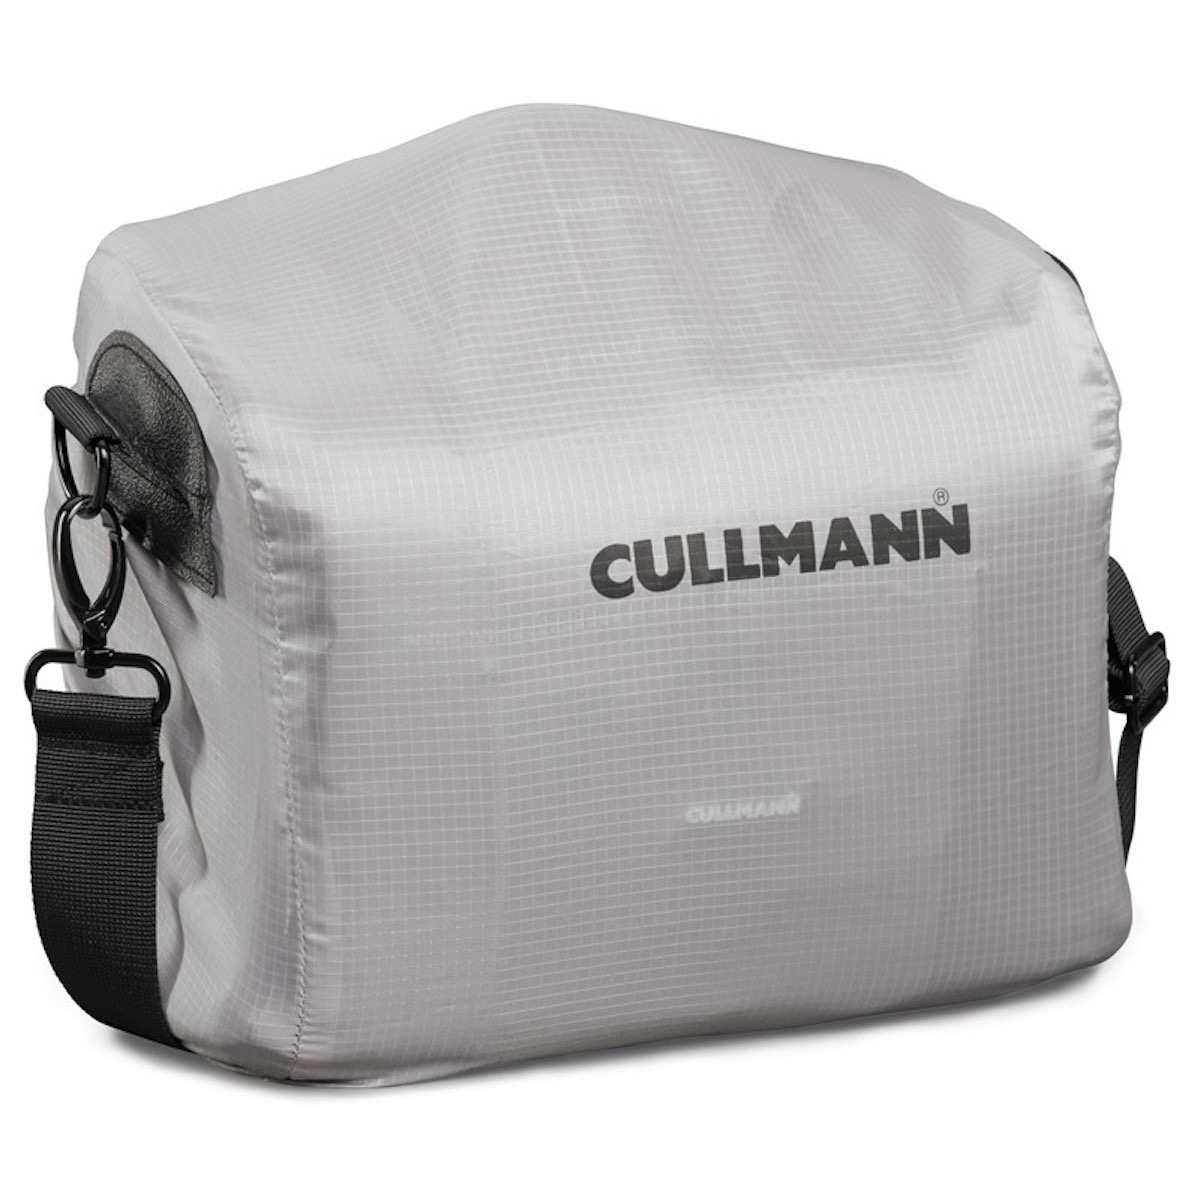 Cullmann Sydney pro Maxima 300